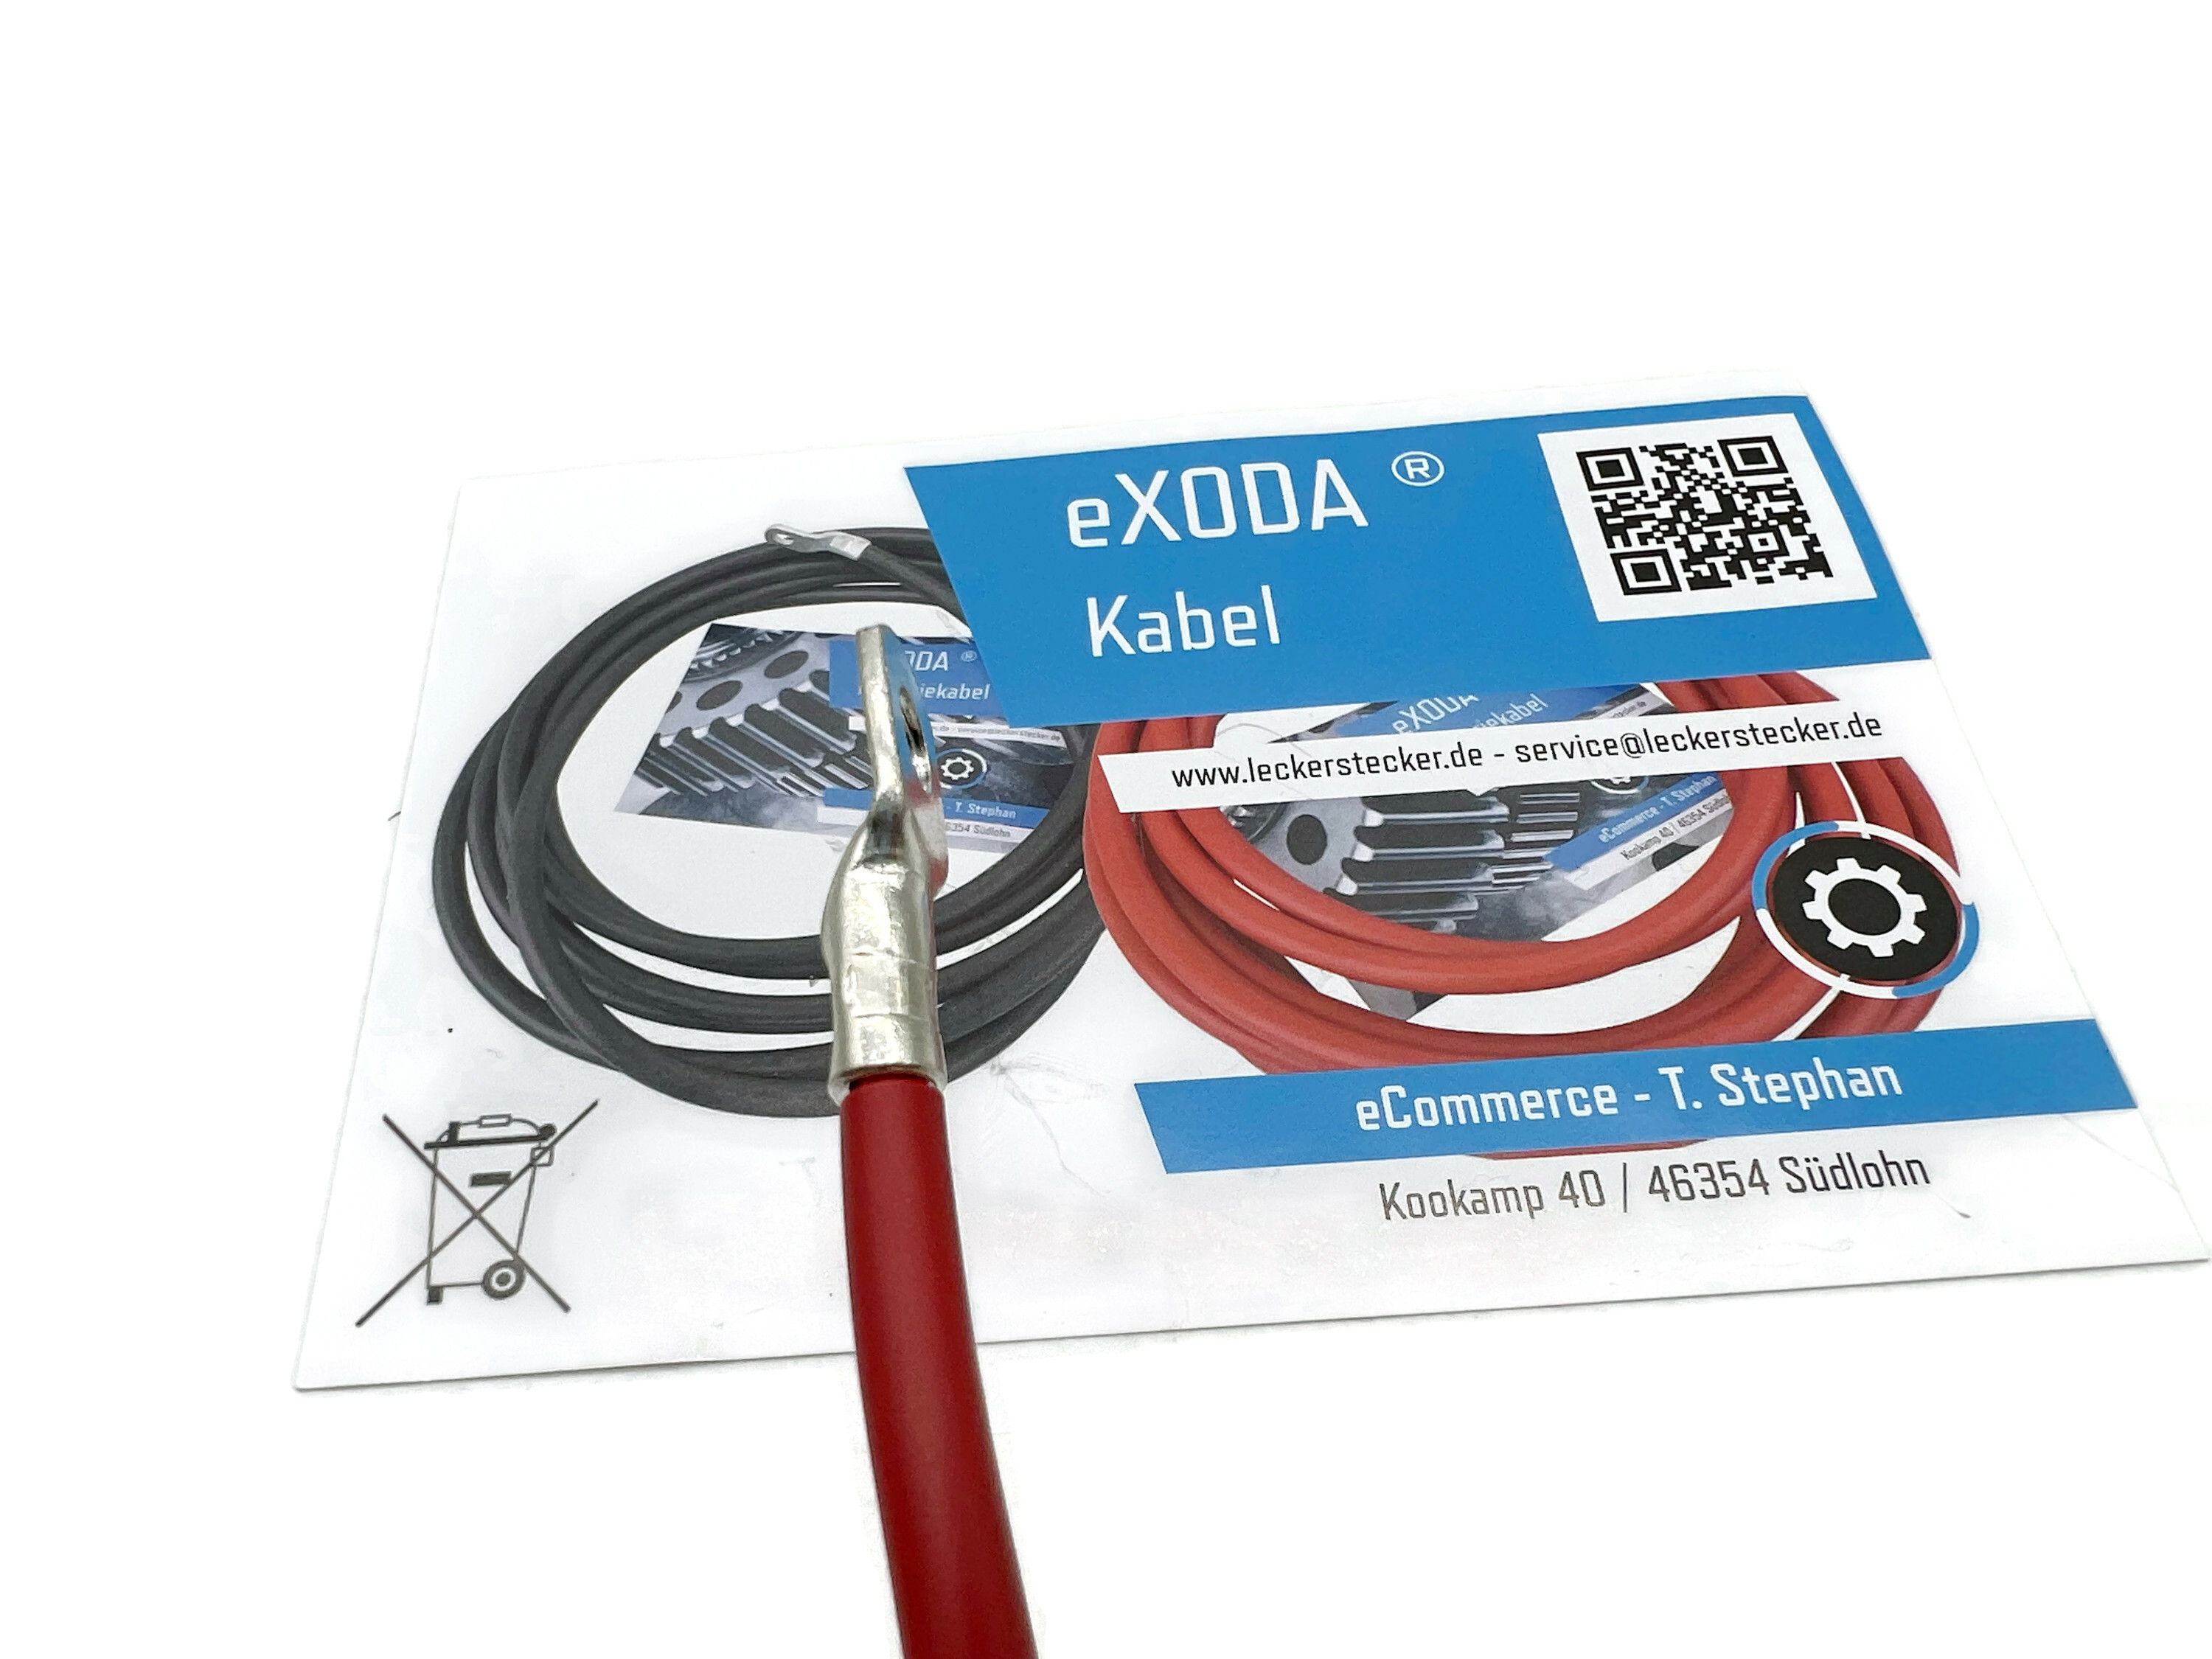 Batteriekabel KFZ Kabel 10 mm² rot + Ringösen/Kabelschuhe M6/M8